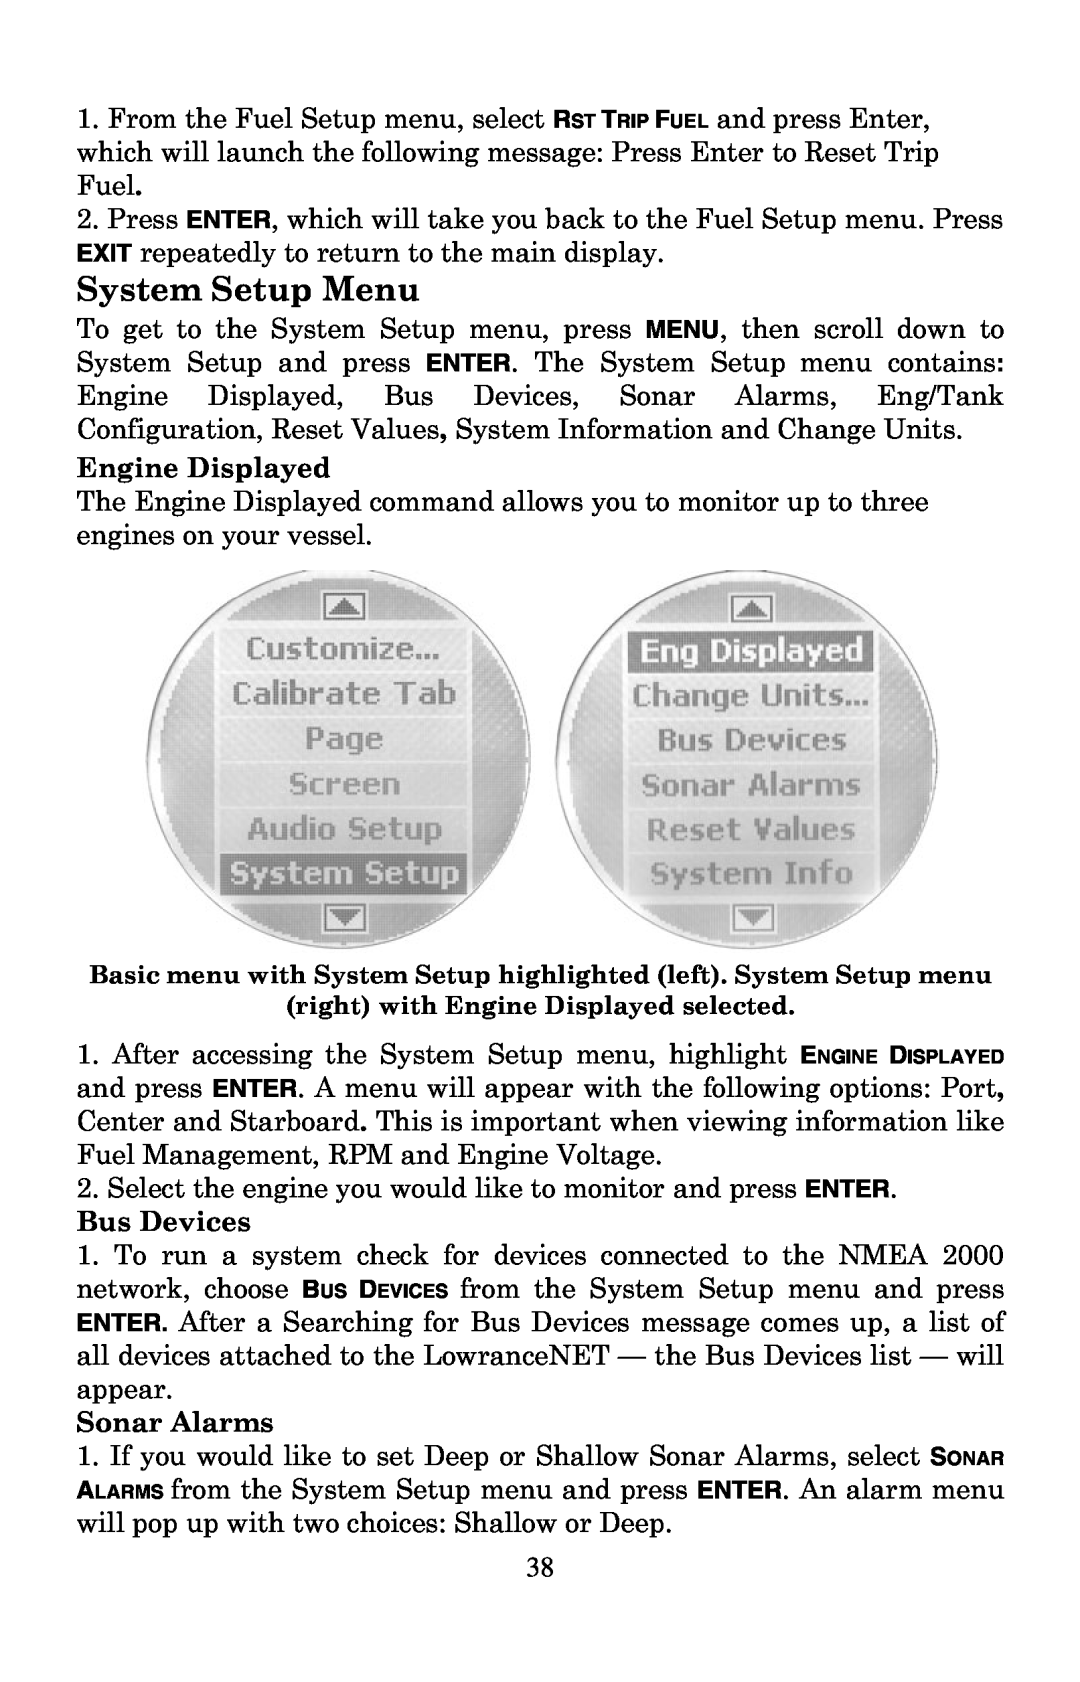 Lowrance electronic LMF-400 manual System Setup Menu, Basic menu with System Setup highlighted left. System Setup menu 